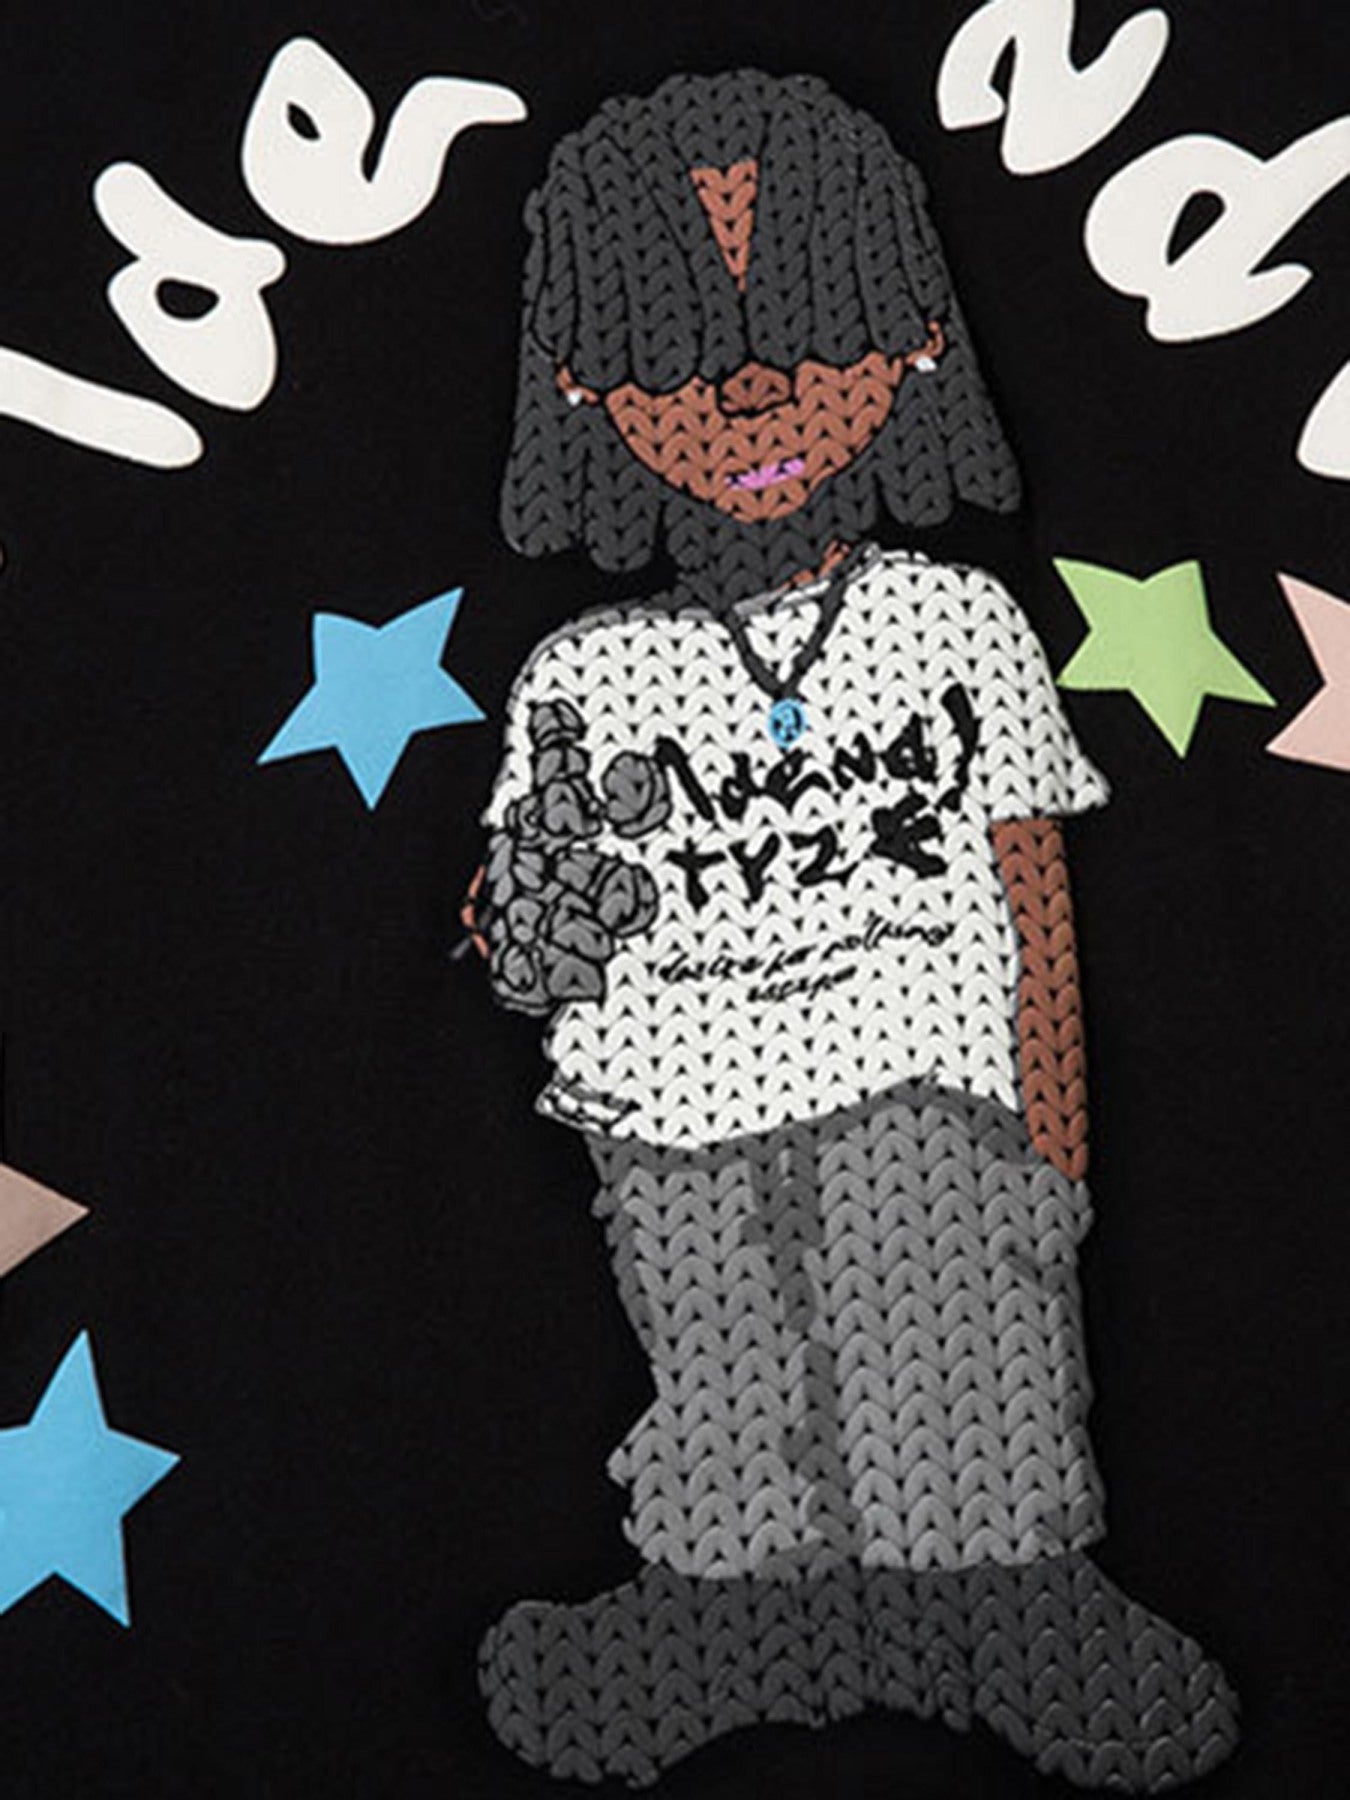 The Supermade Hip Hop Cartoon Character Print T-shirt